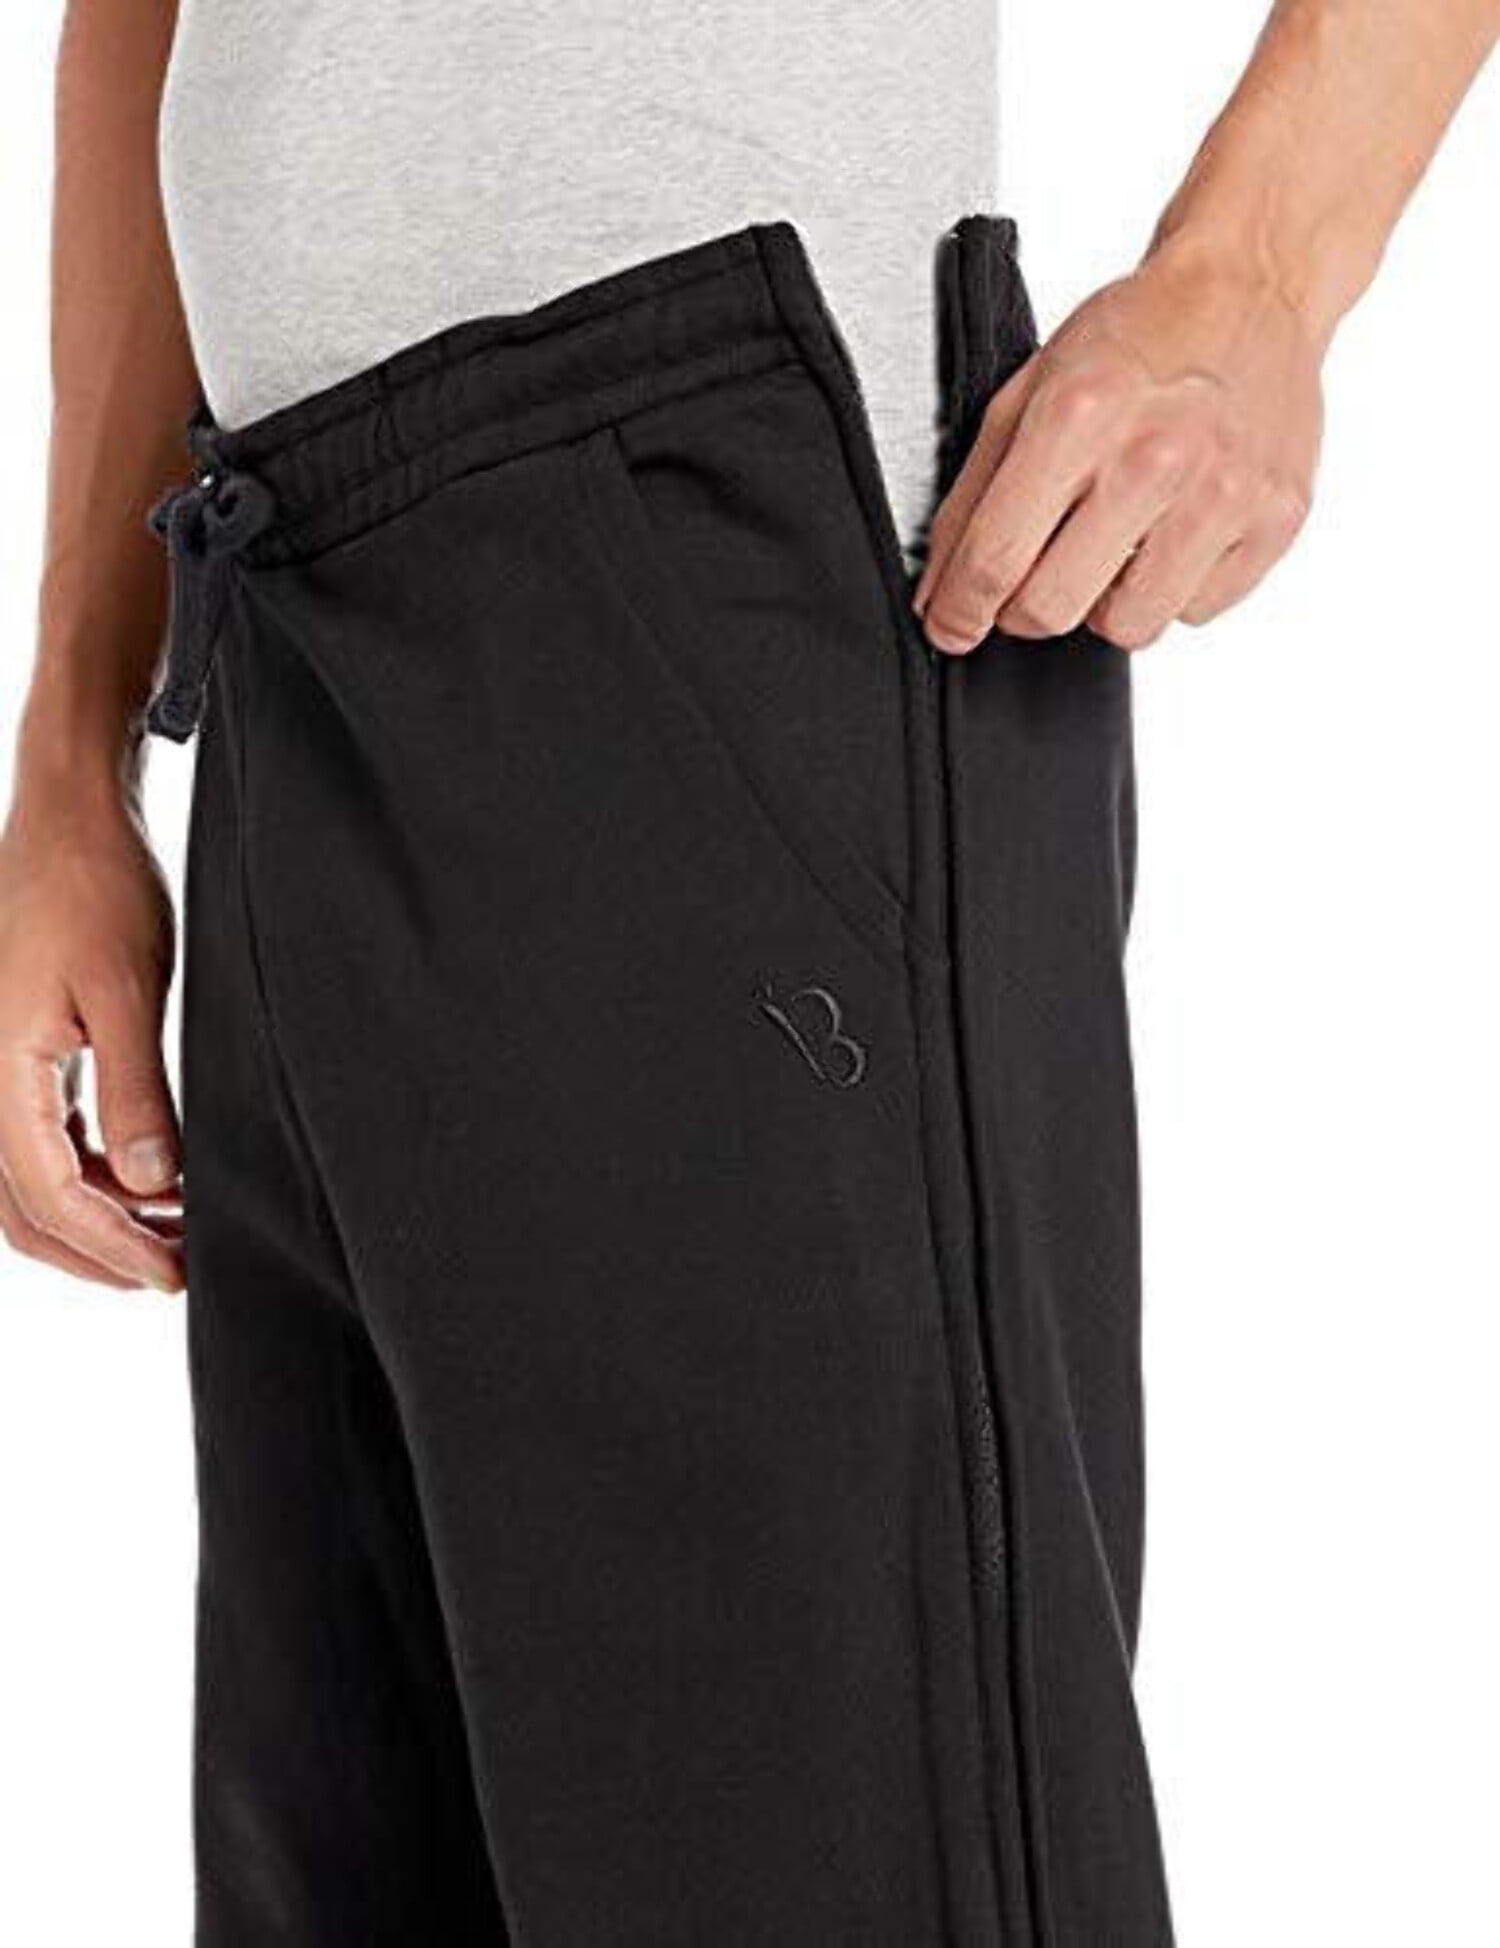 Full Side-Zipper Fleece Pants w/Pockets-Opens TOP to BOTTOM - Walmart.com